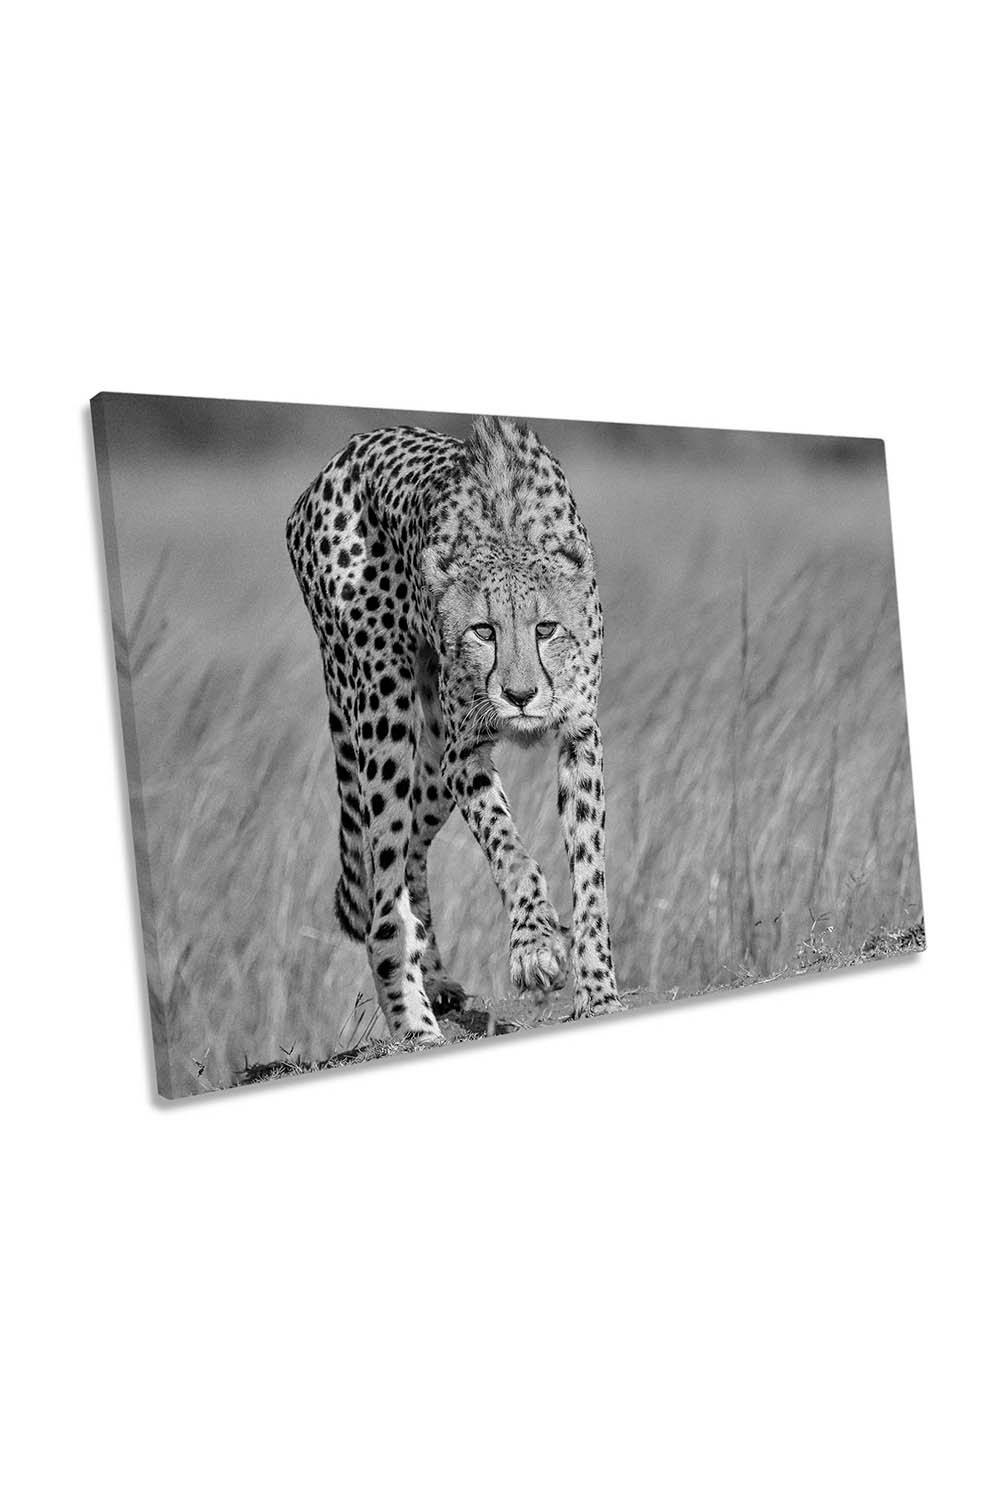 Focused Predator Cheetah Canvas Wall Art Picture Print